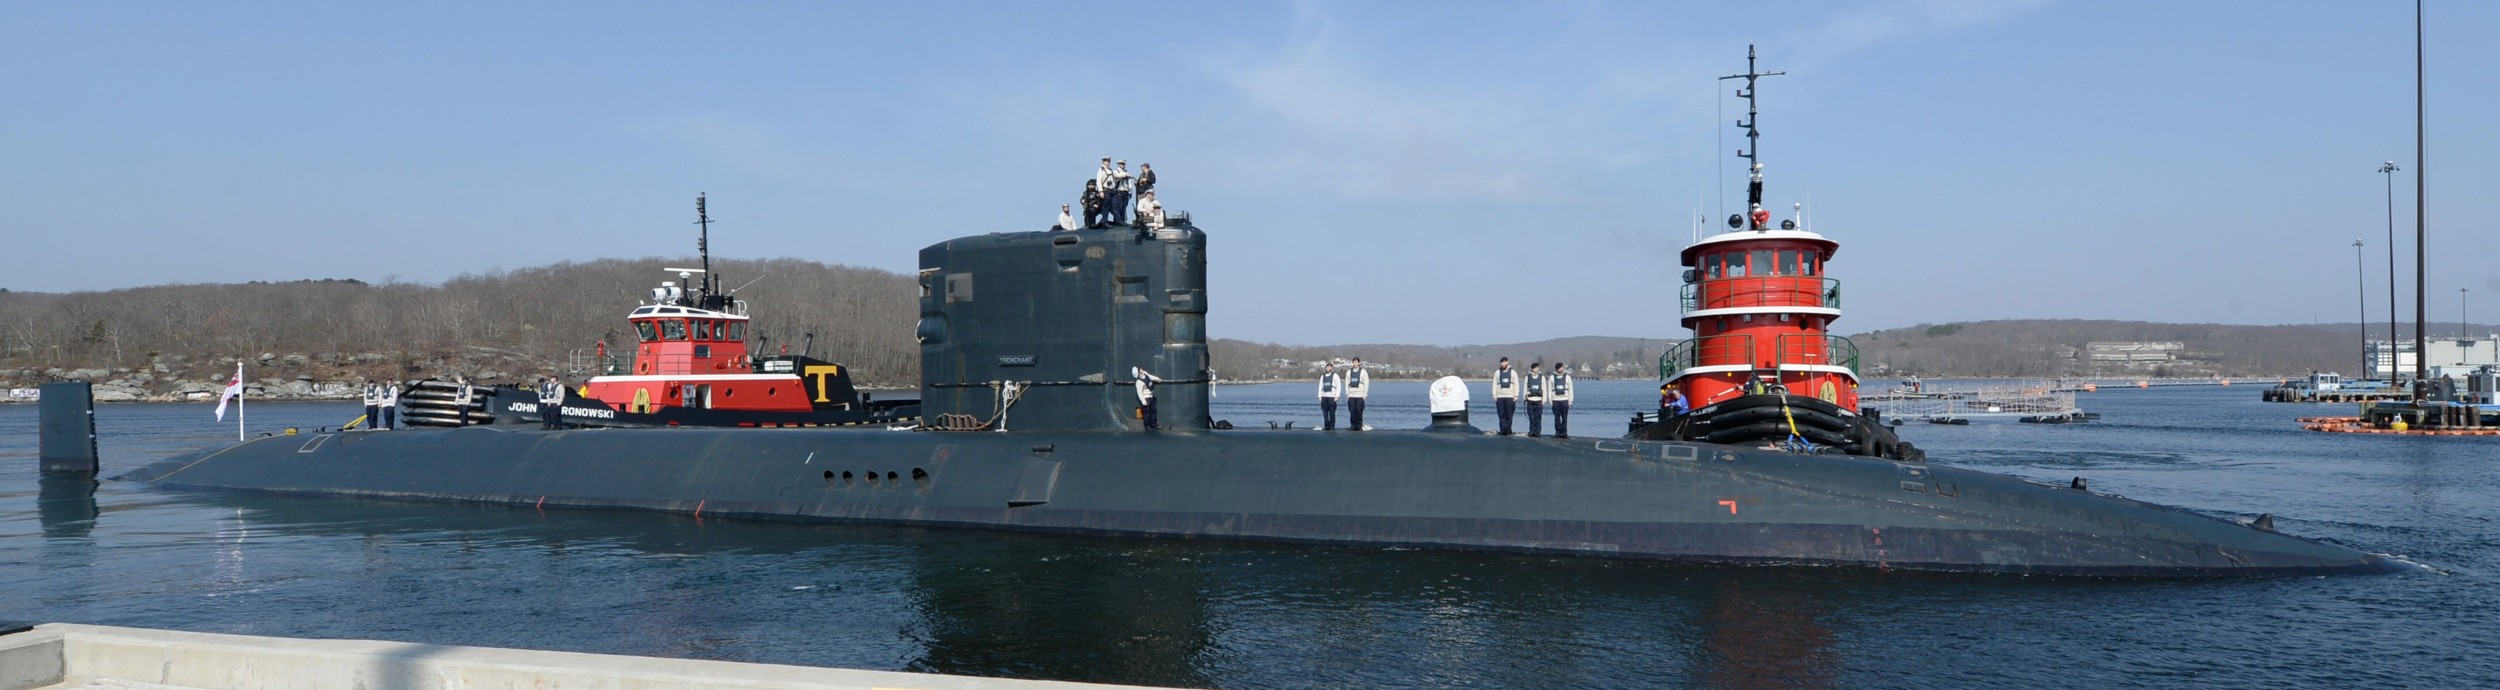 hms trenchant s-91 trafalgar class attack submarine royal navy 08